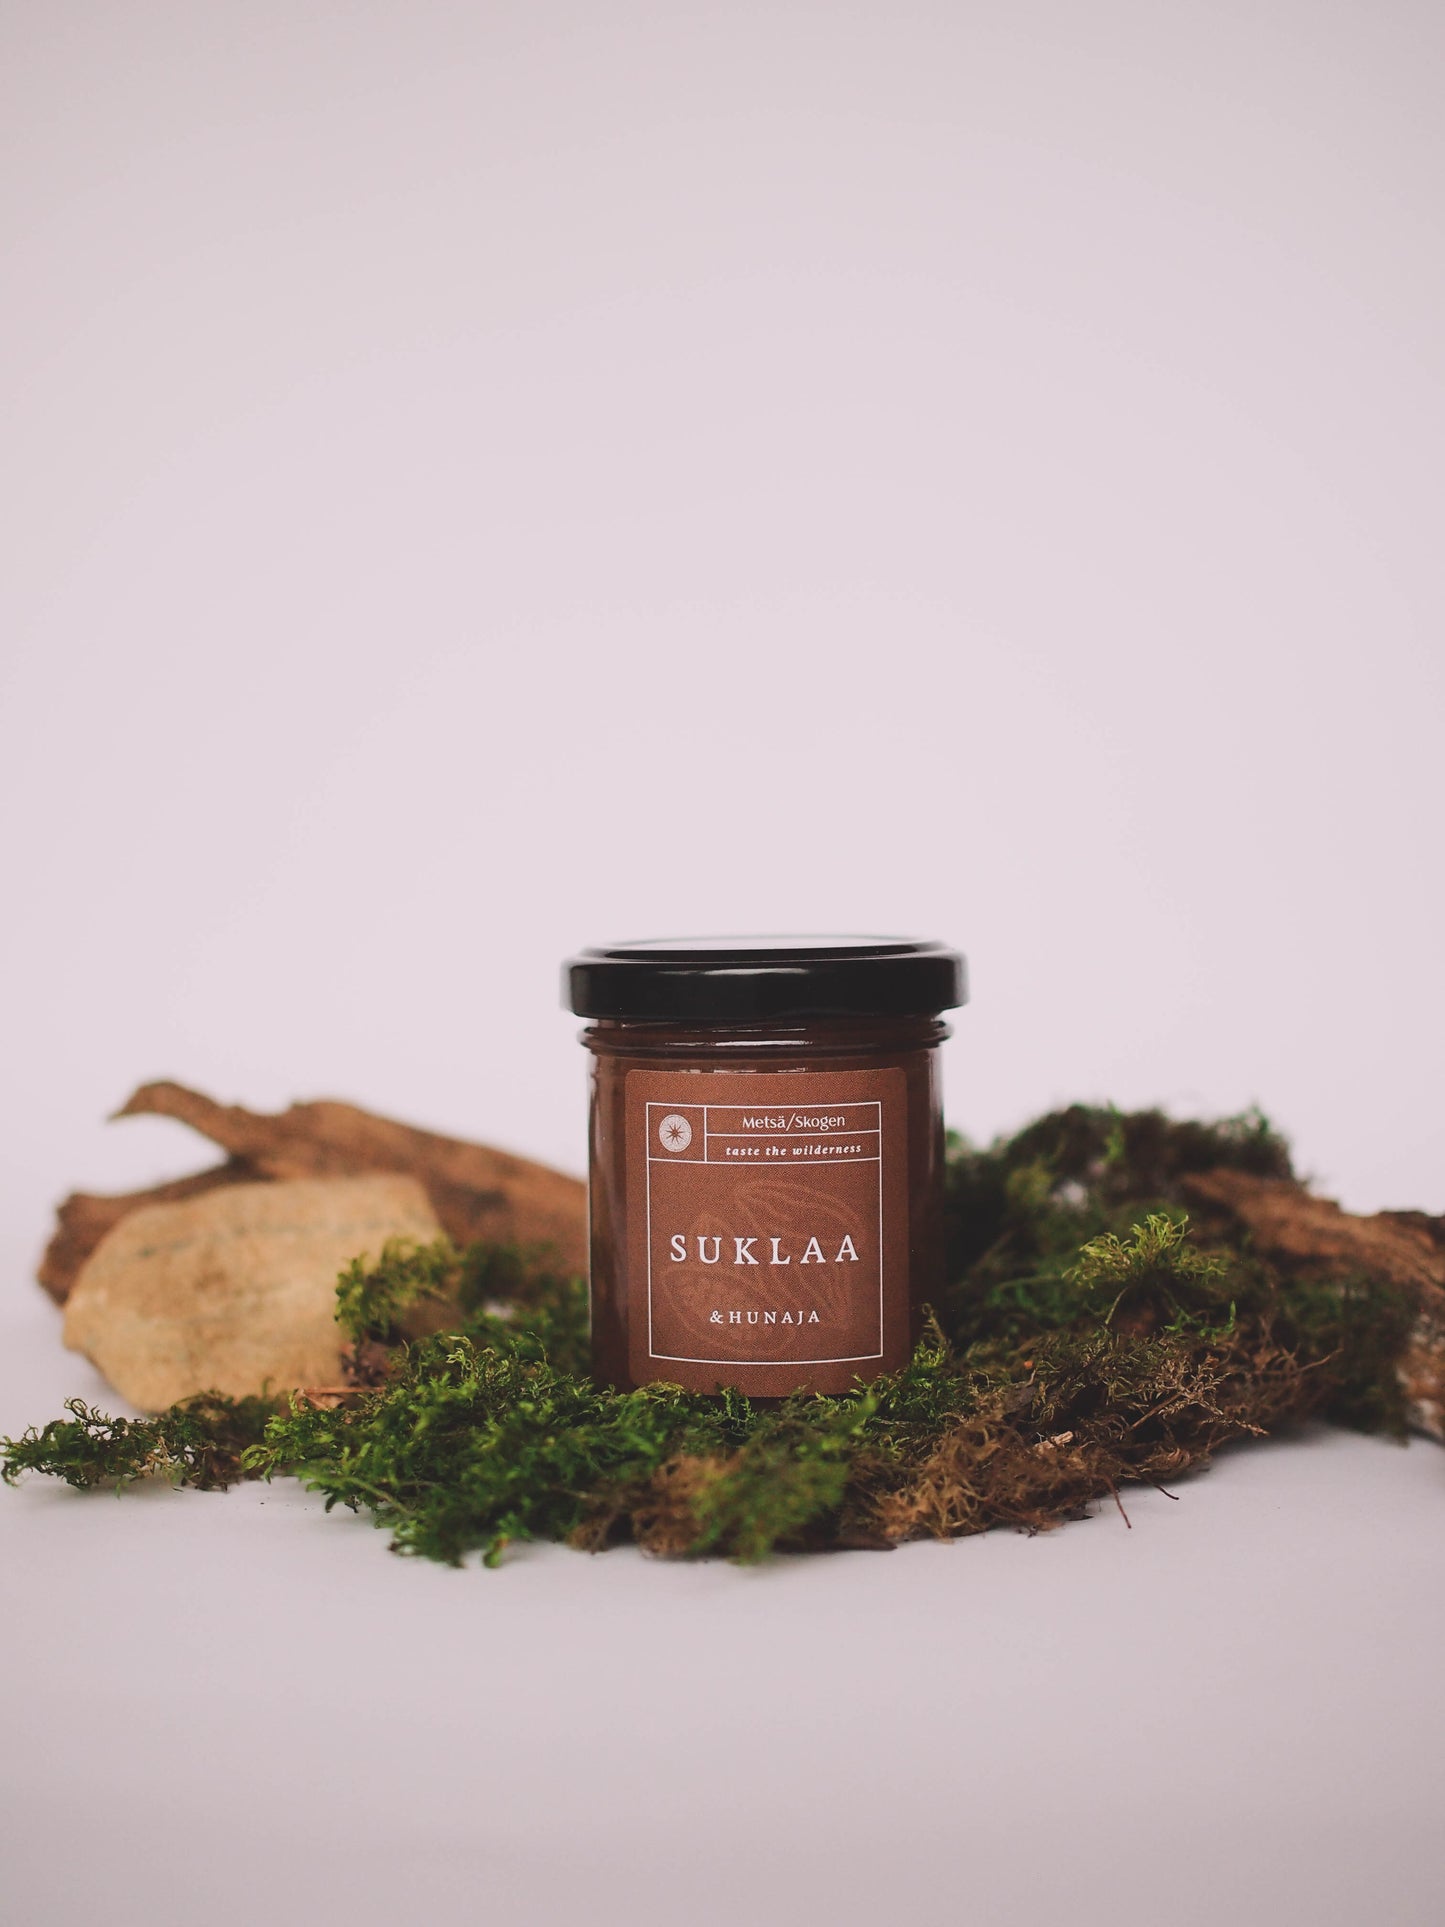 Metsä/Skogen Chocolate & Honey